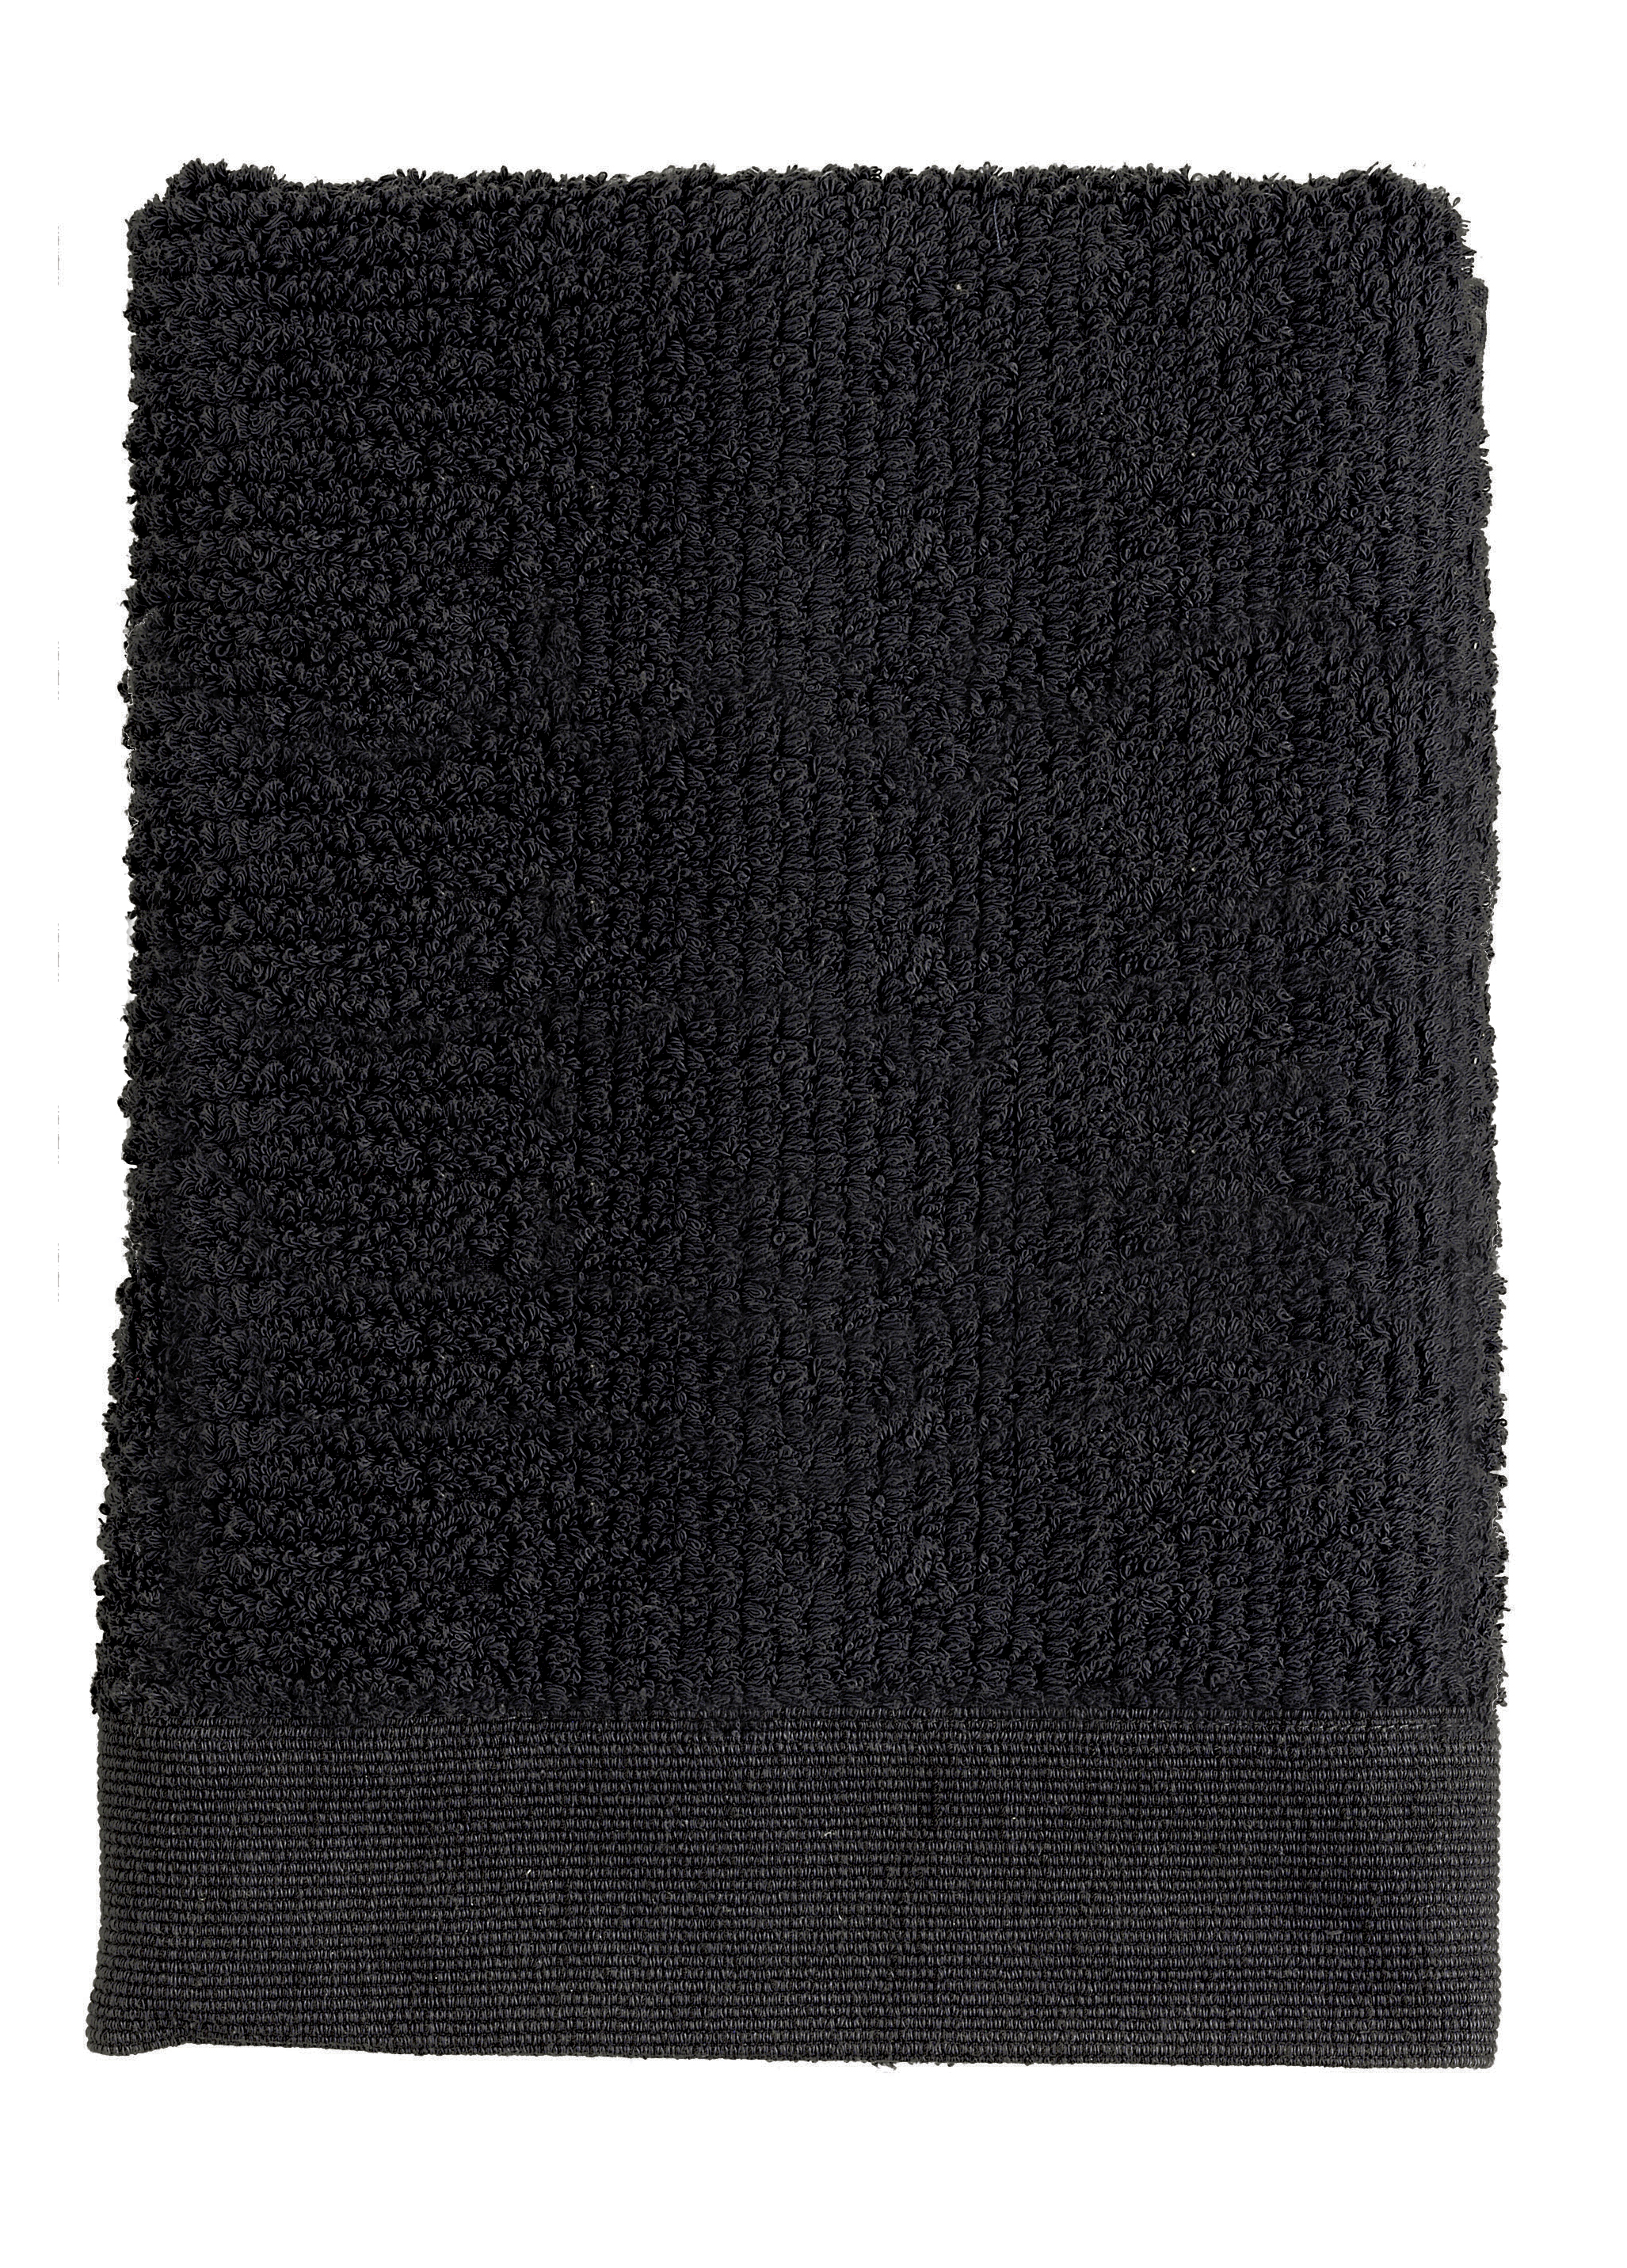 Zone - Classic Towel 70 x 140 cm - Black (330491)